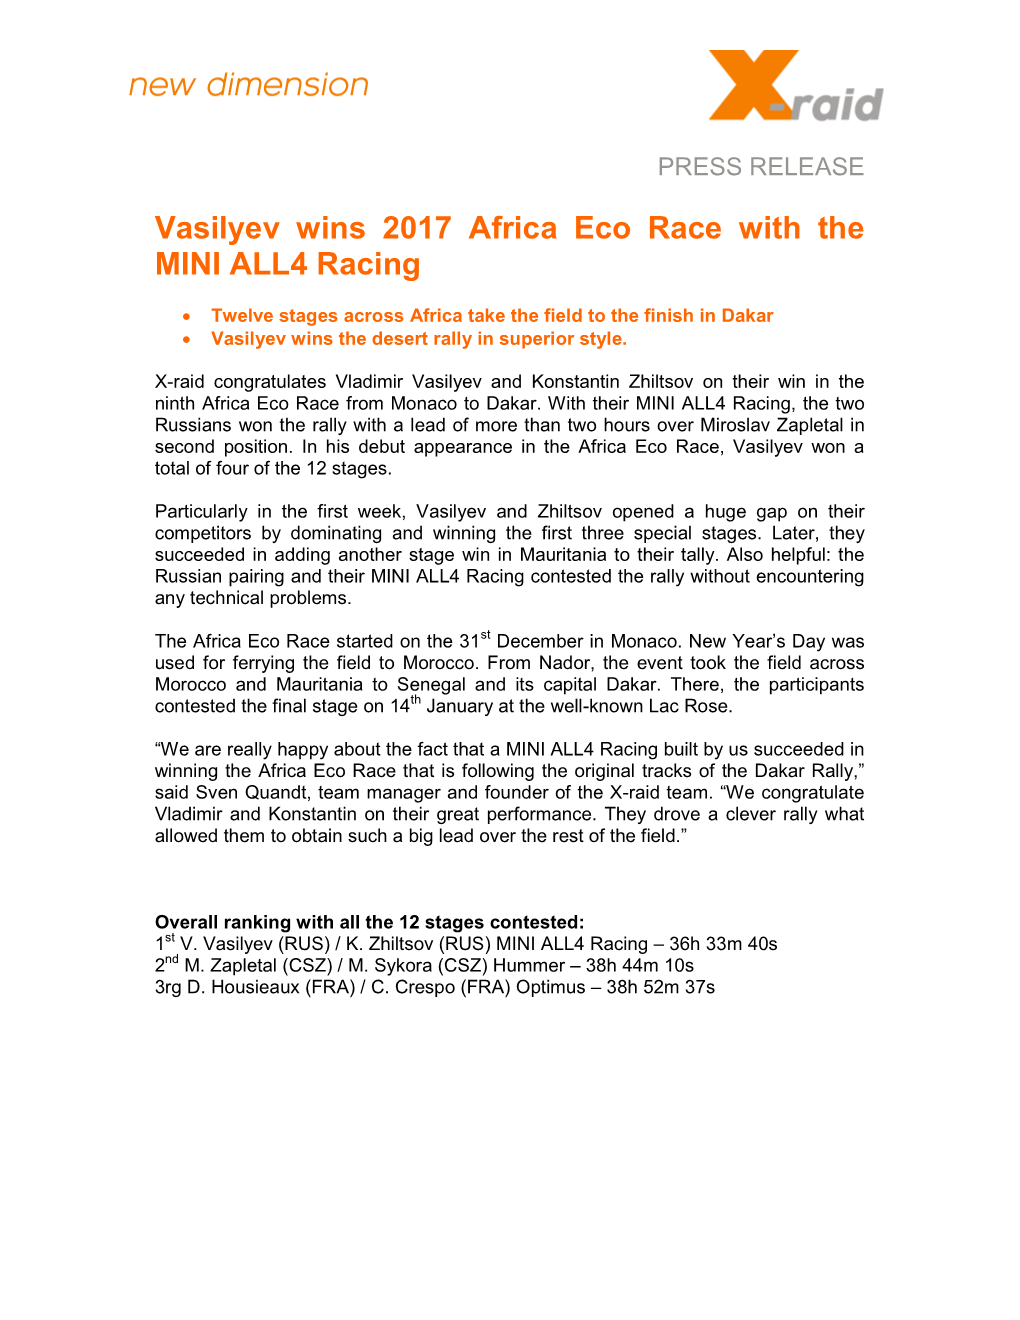 Vasilyev Wins 2017 Africa Eco Race with the MINI ALL4 Racing